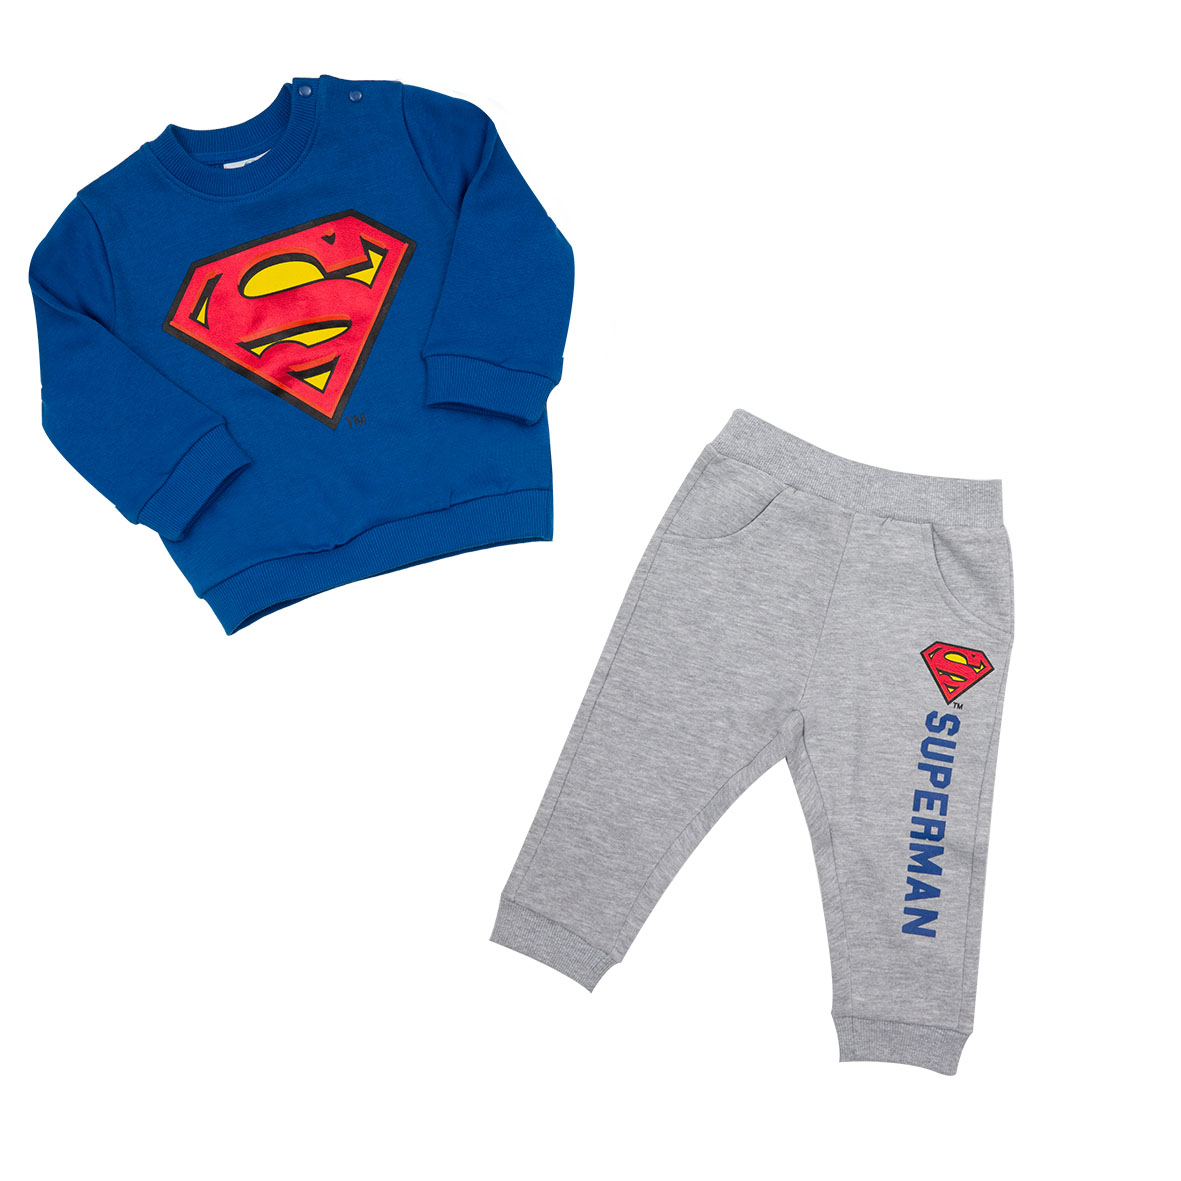 Tute jogging con maglia felpa royal superman - Jbrand